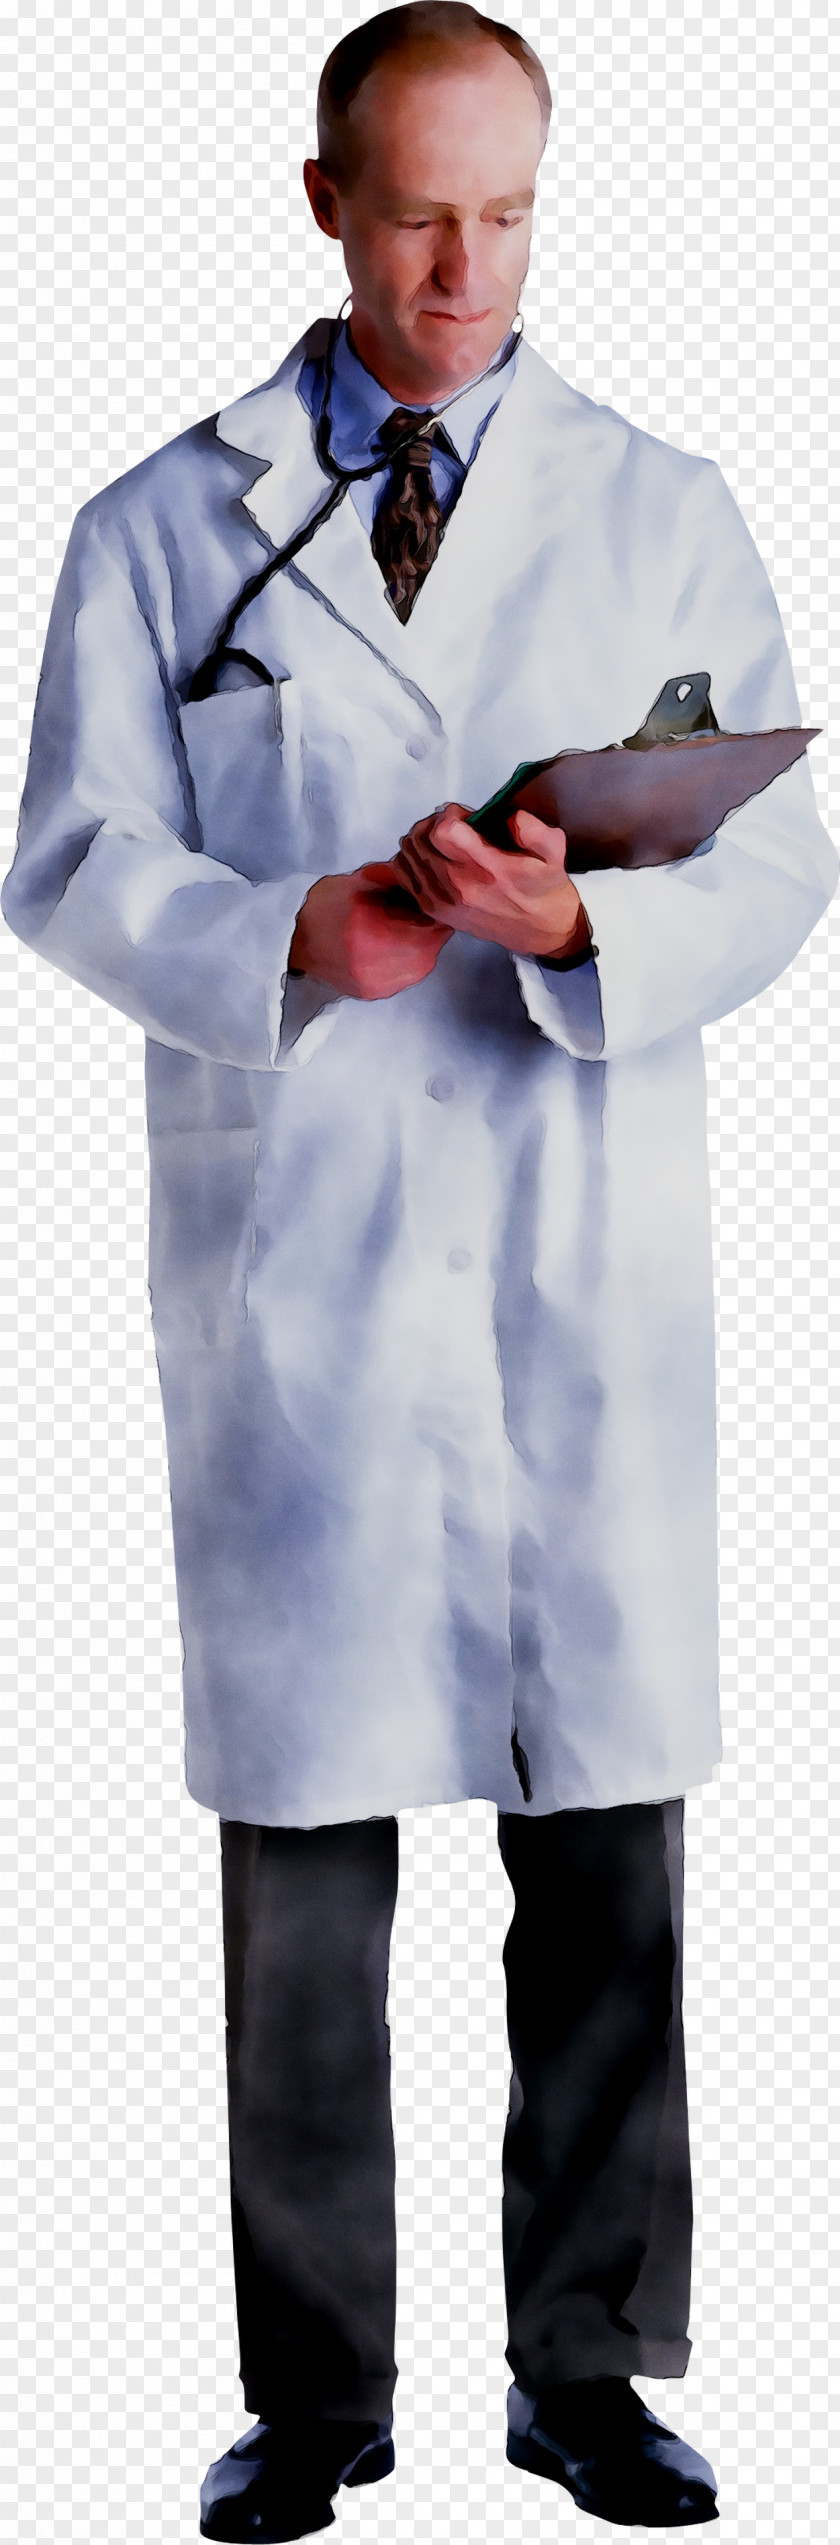 Lab Coats Chef's Uniform Sleeve PNG